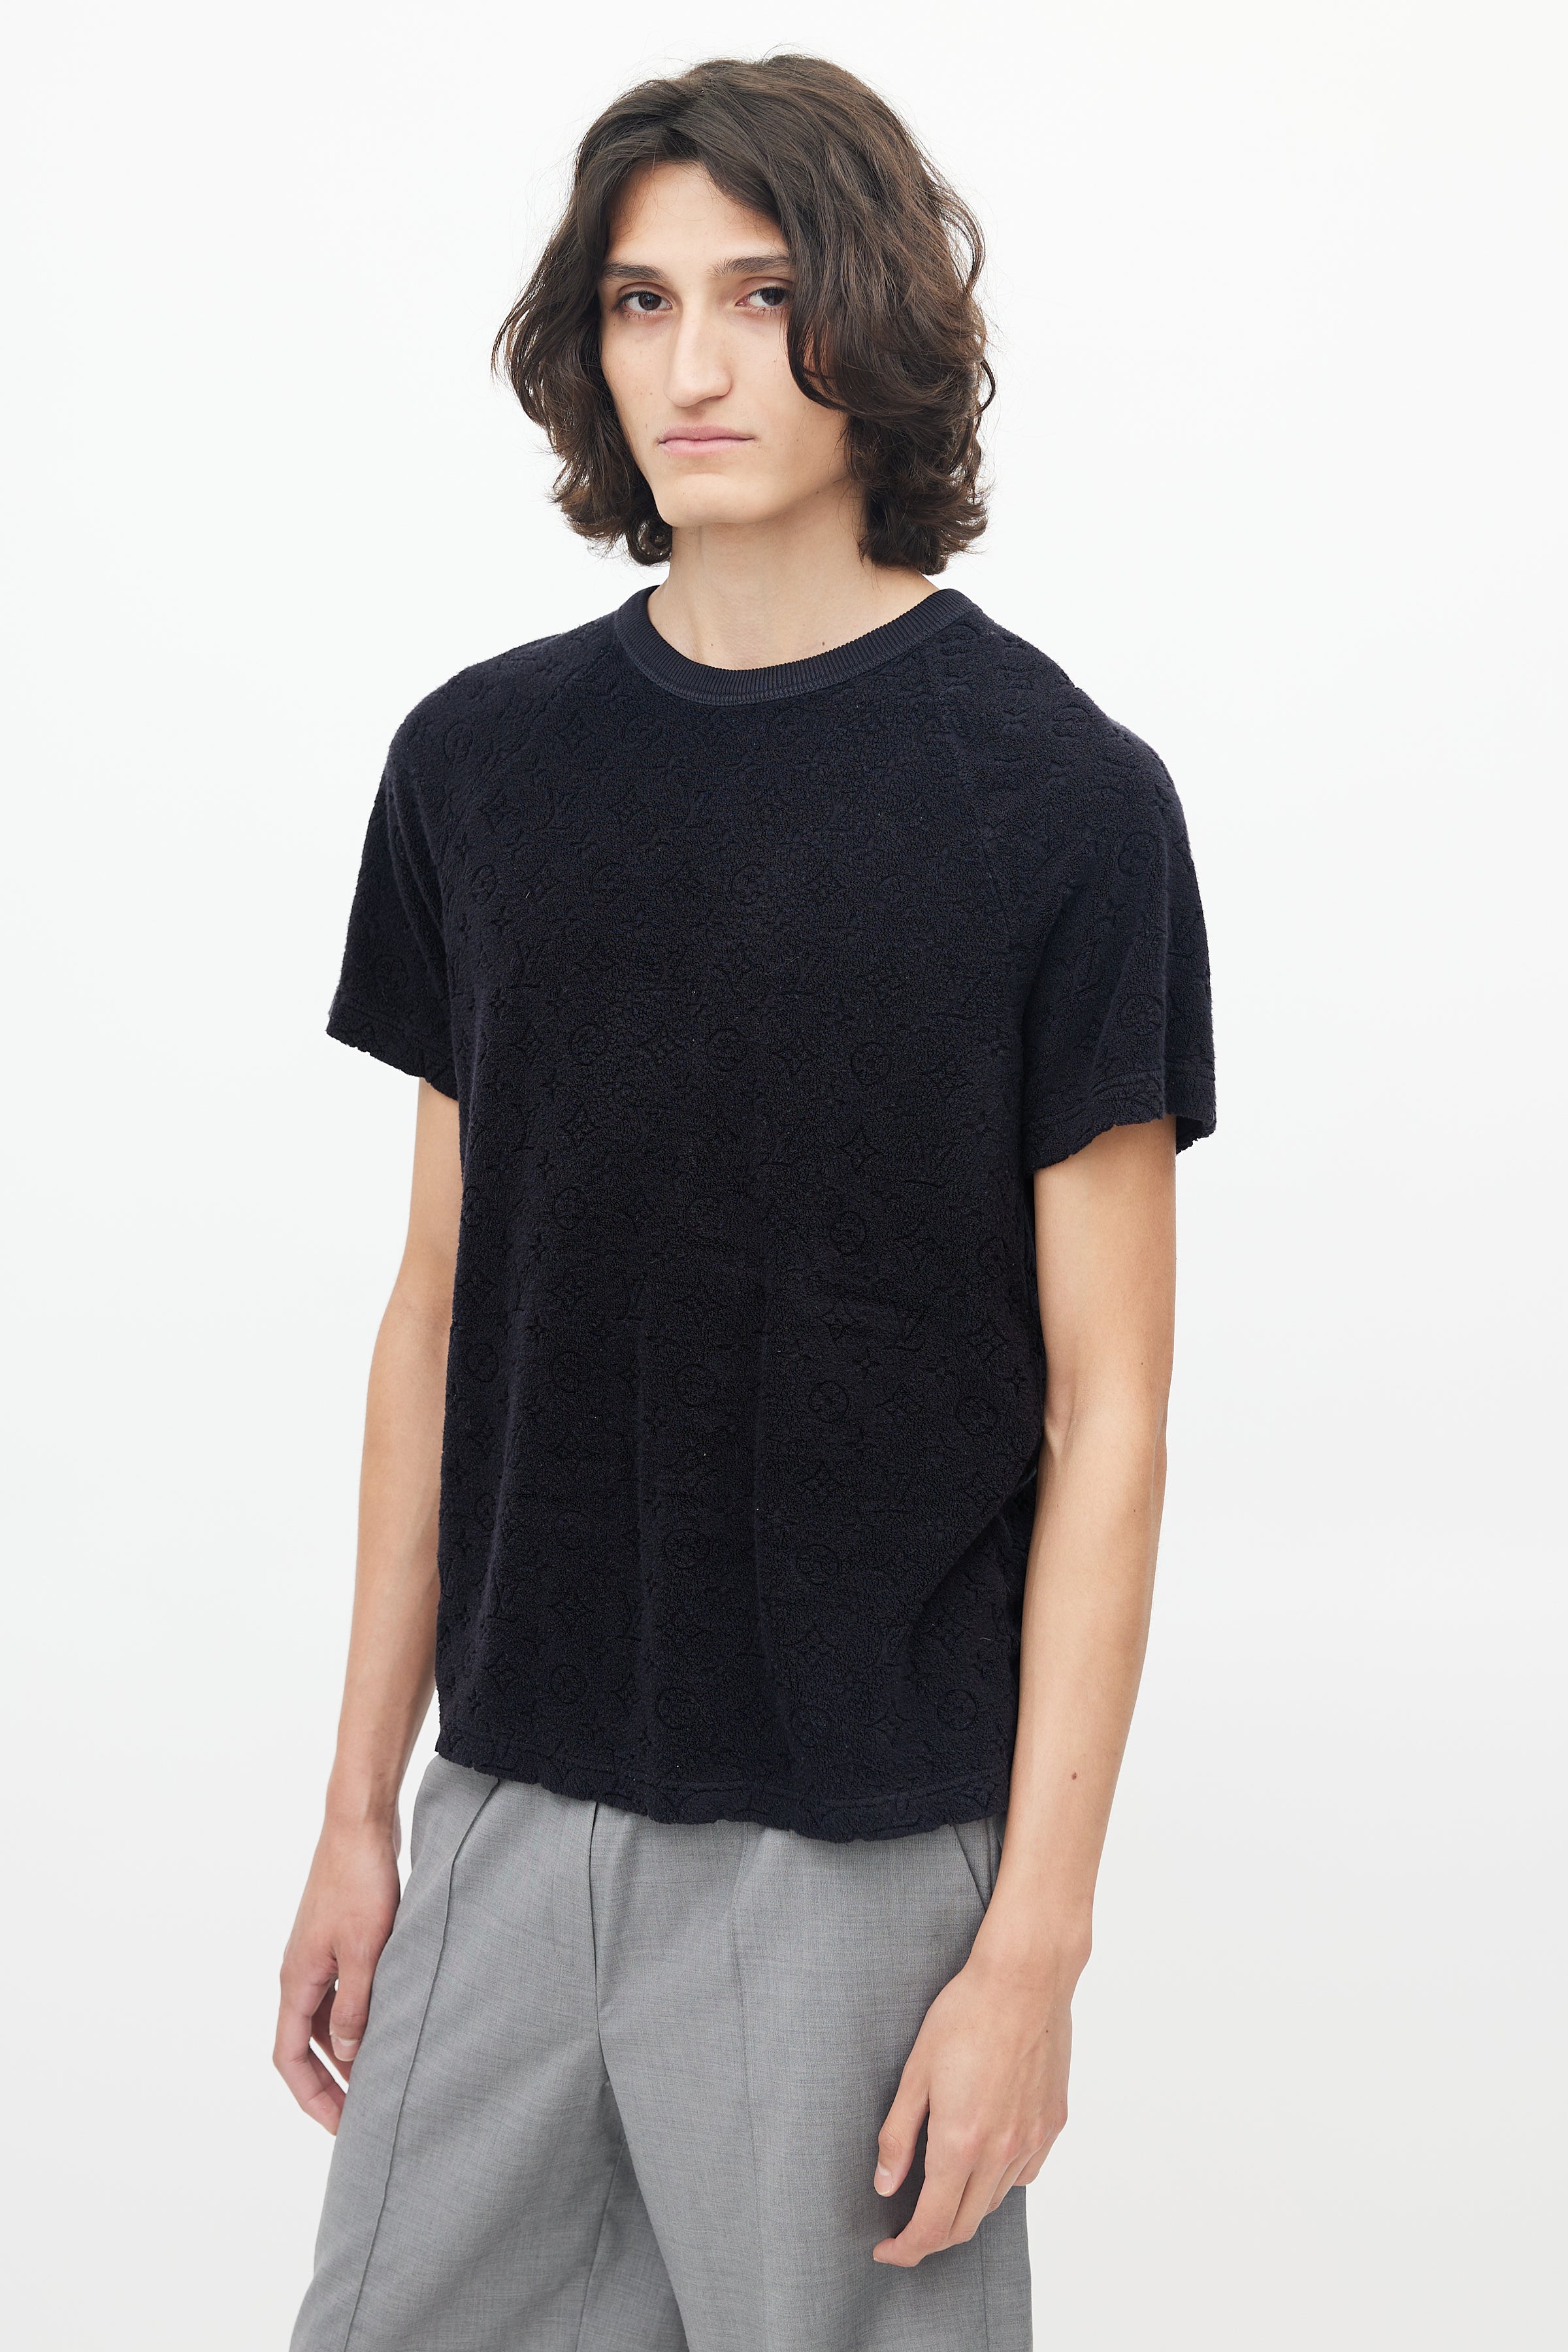 Louis Vuitton - Authenticated T-Shirt - Cotton Black For Man, Never Worn